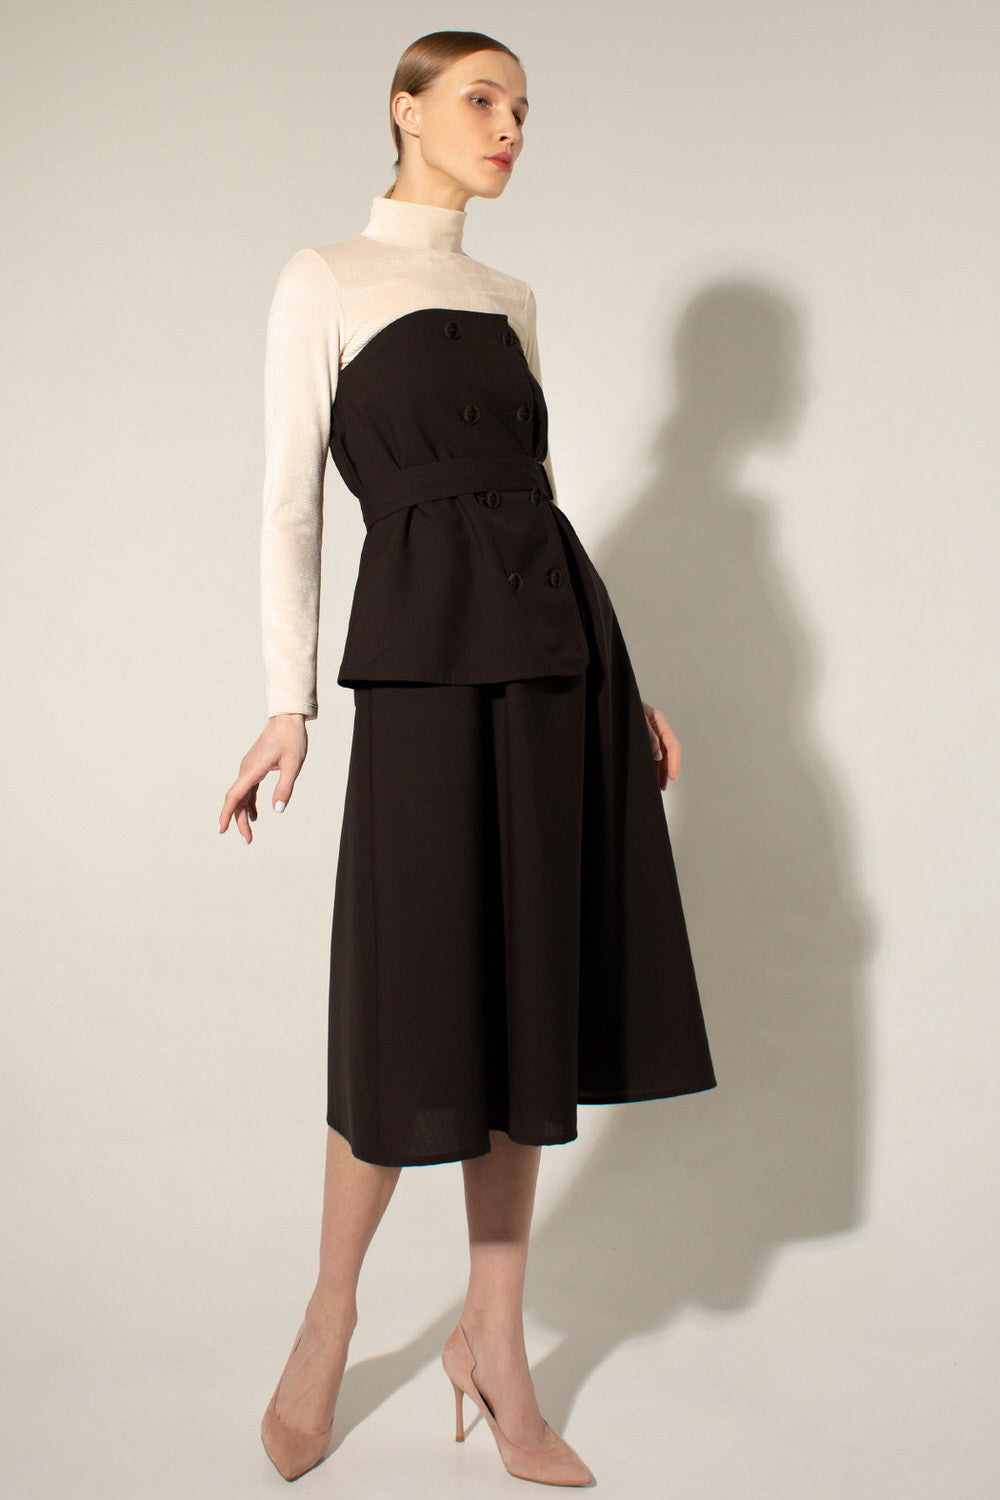 Transformable dress made of textile material (PANOVE) U.PN00146N